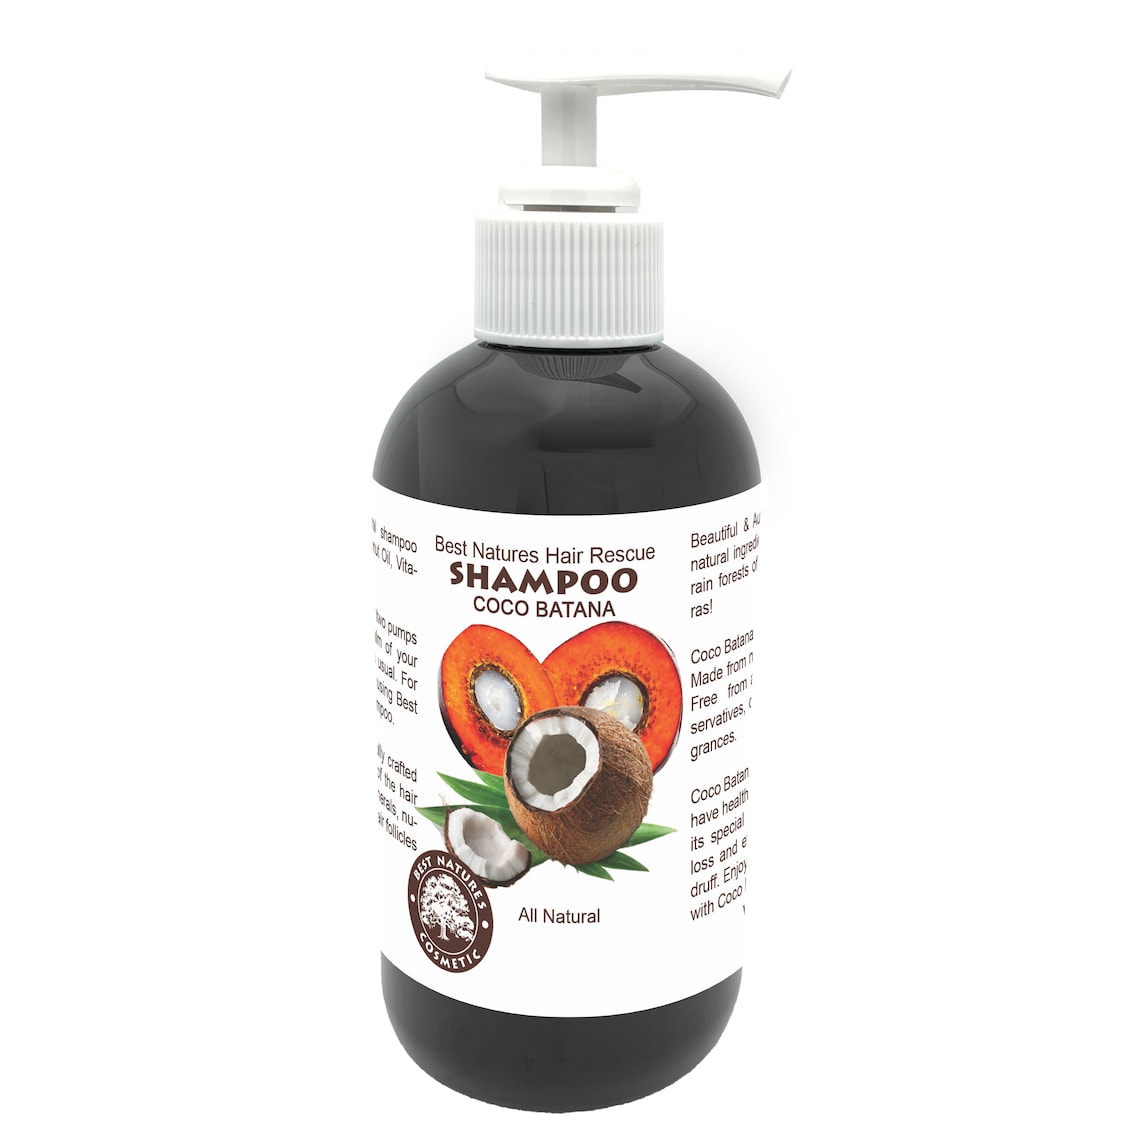 COCO BATANA Shampoo - hair growth, strengthens hair, restoring vitality to dry and damaged hairs, reduce hair loss...